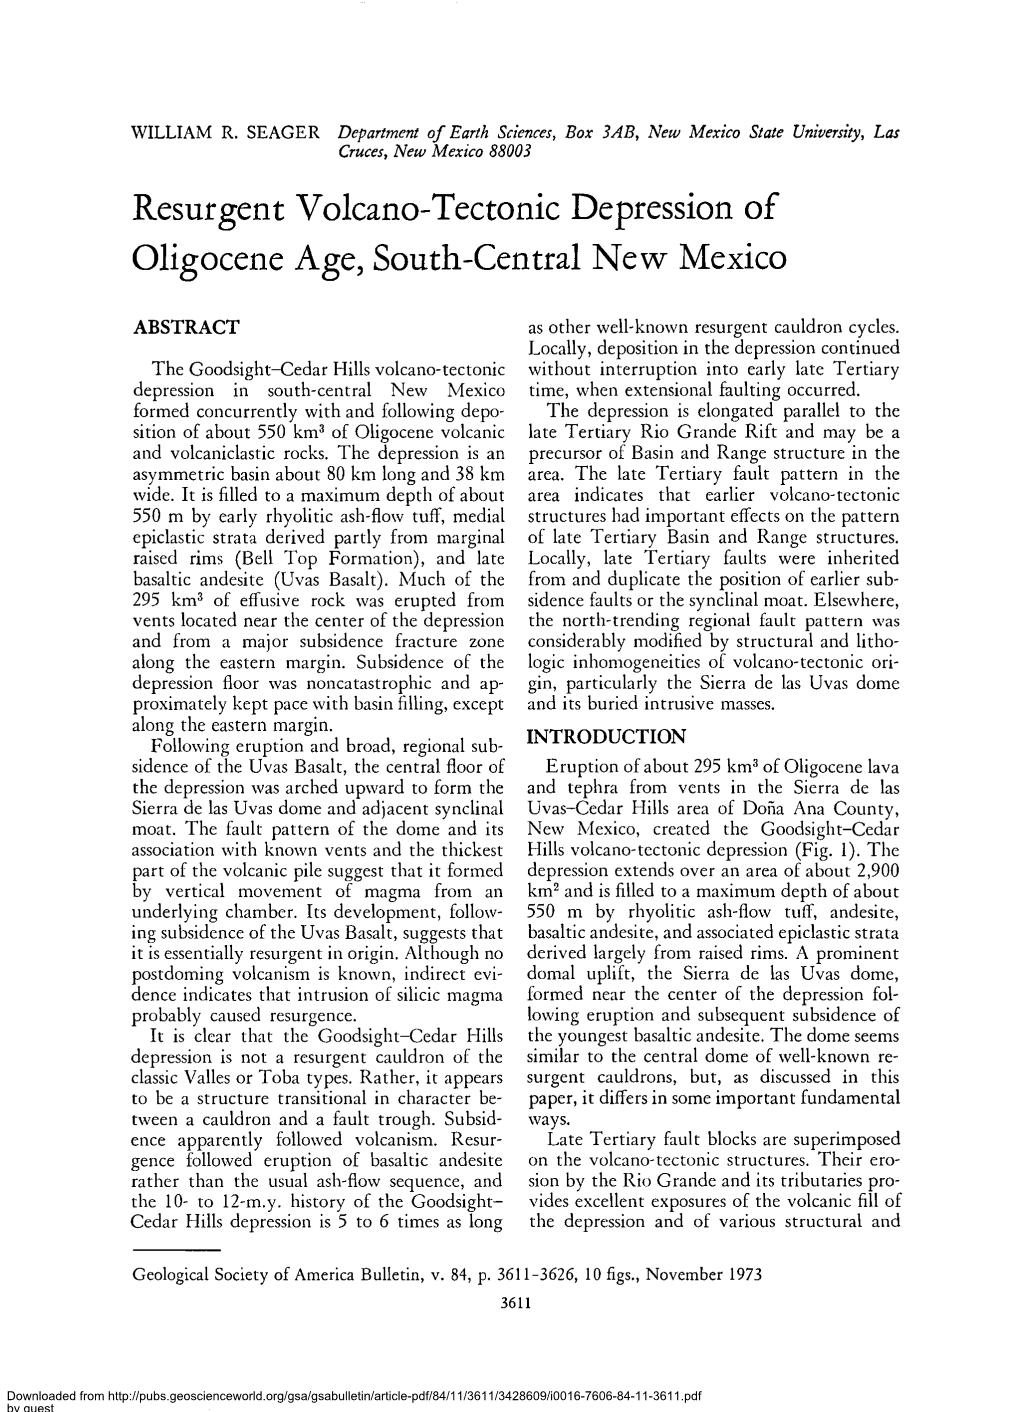 Resurgent Volcano-Tectonic Depression of Oligocene Age, South-Central New Mexico